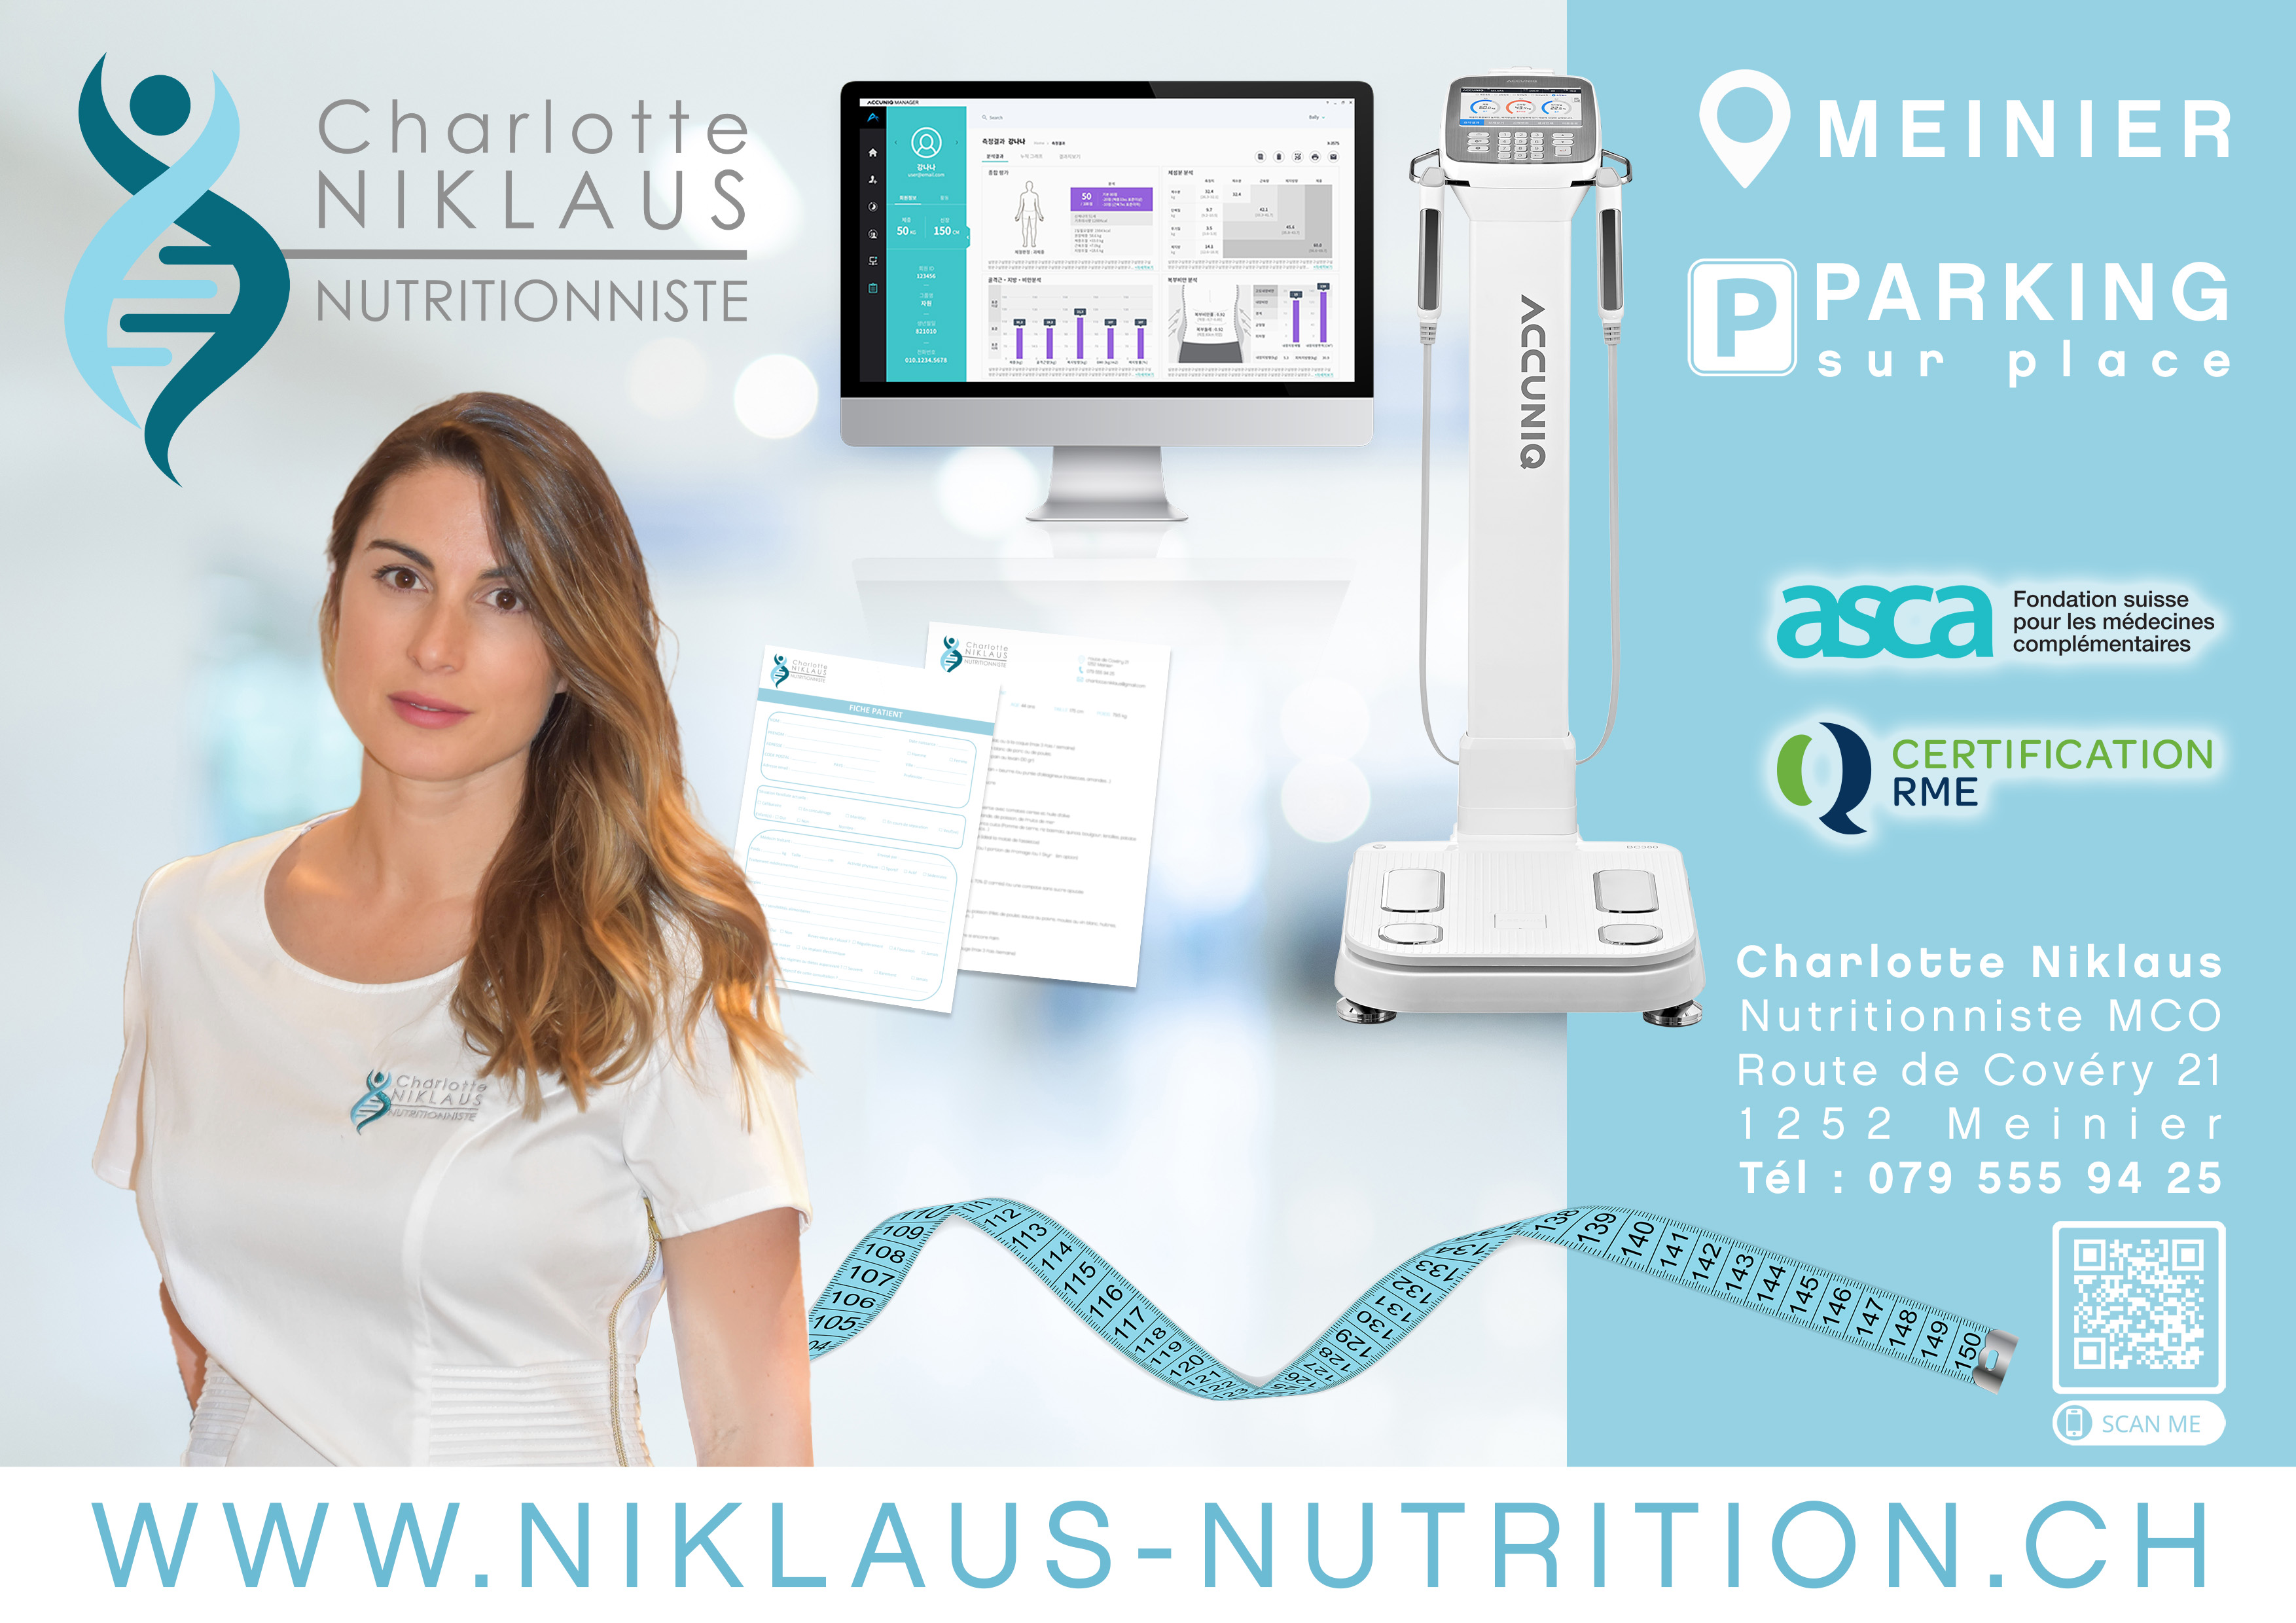 Charlotte Niklaus Nutritionniste